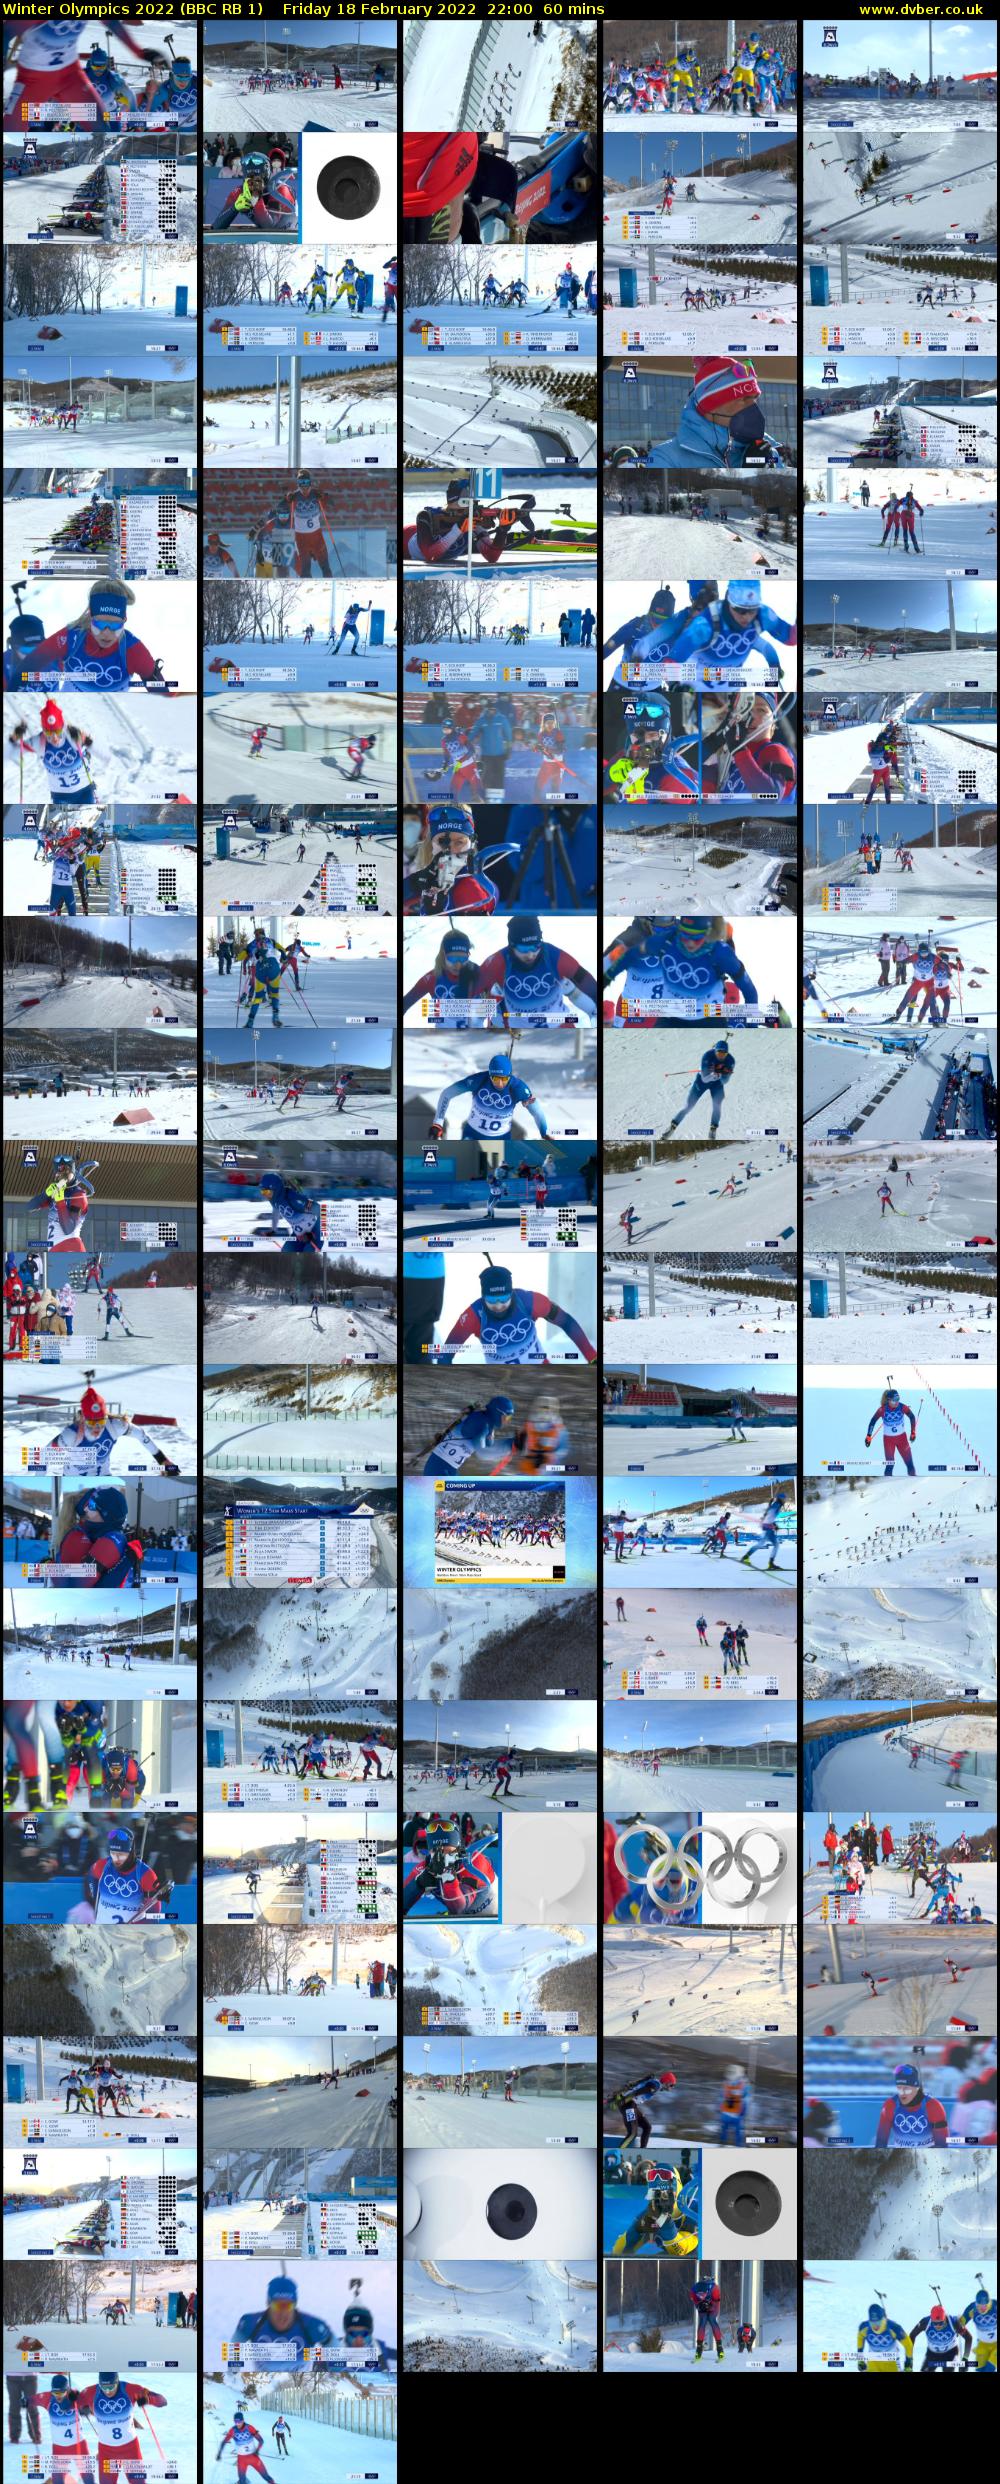 Winter Olympics 2022 (BBC RB 1) Friday 18 February 2022 22:00 - 23:00